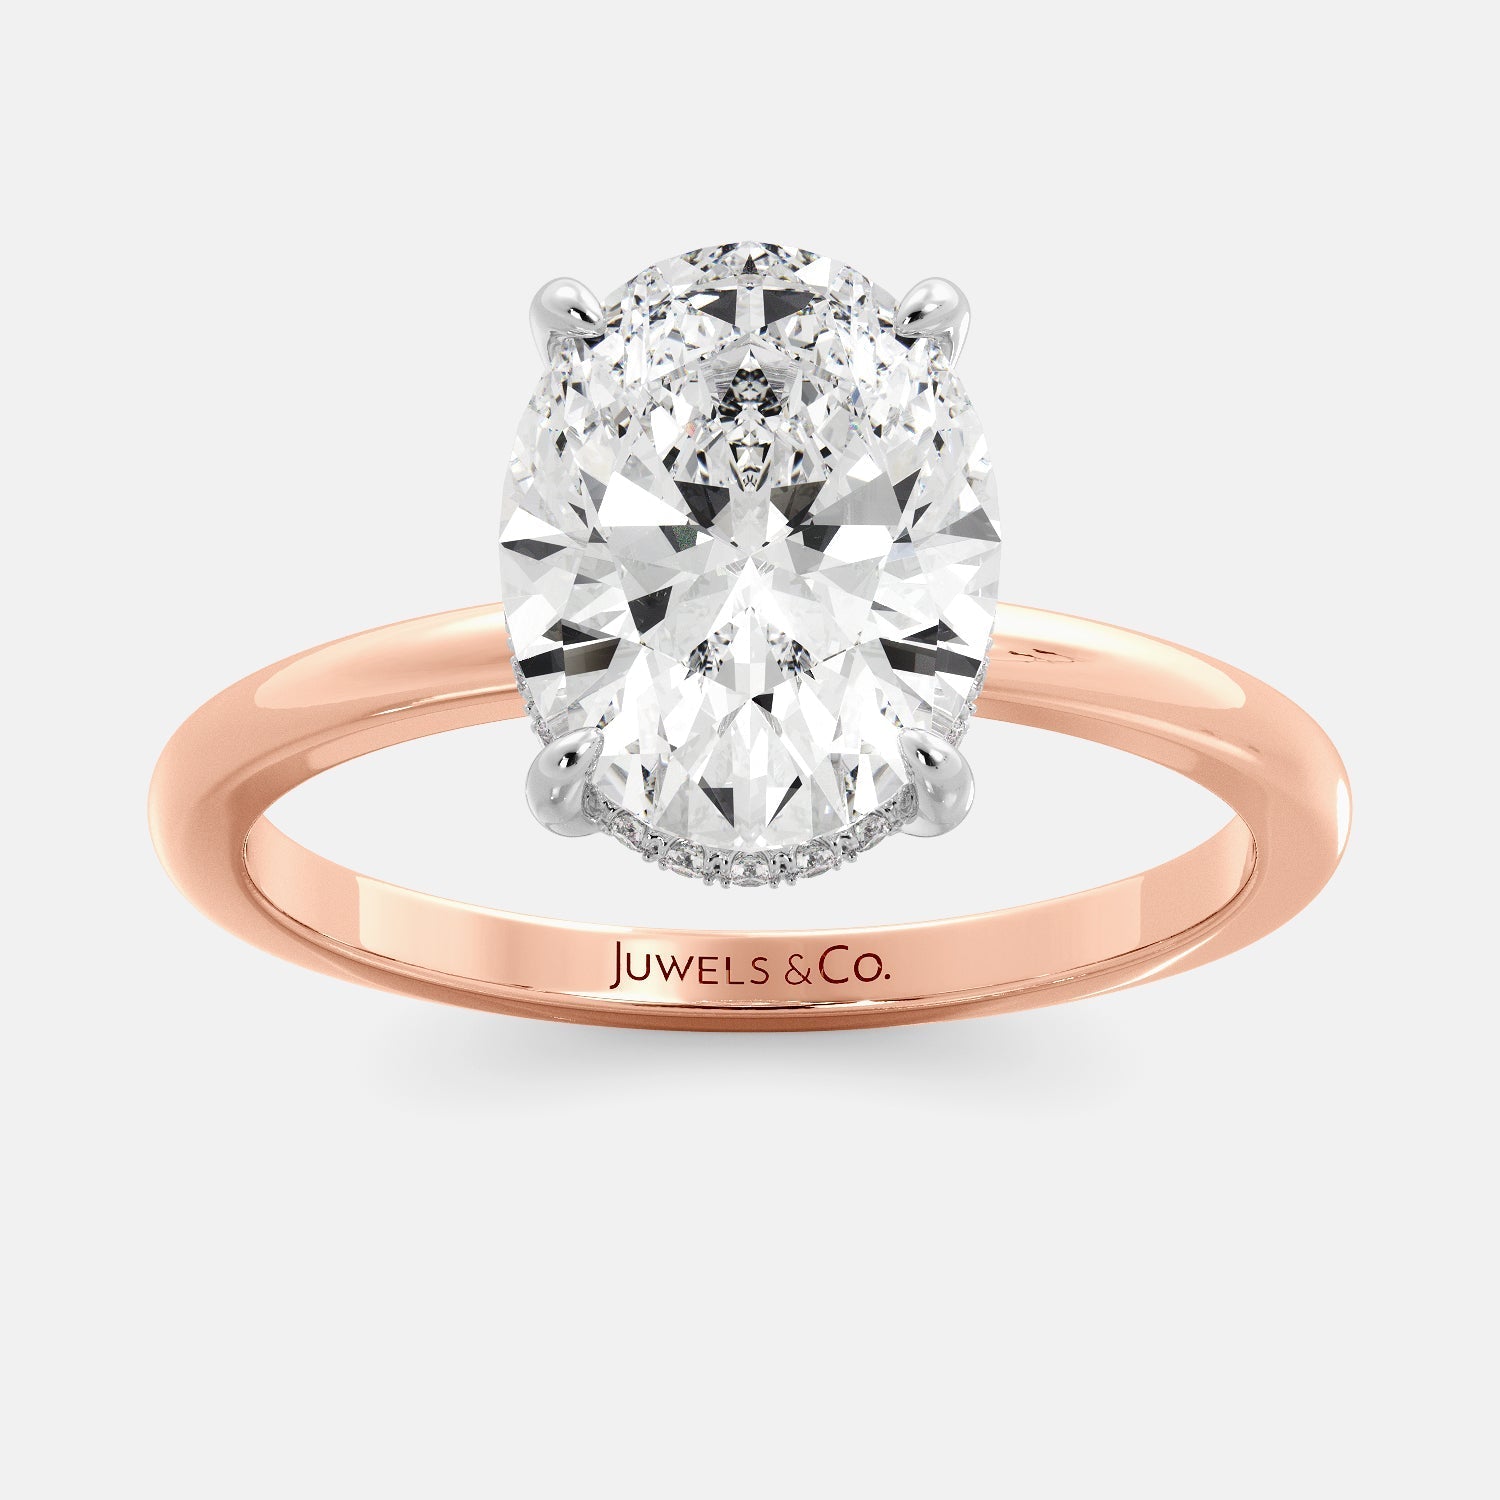 Lab-grown Oval Cut Diamond Ring, rose gold 14K